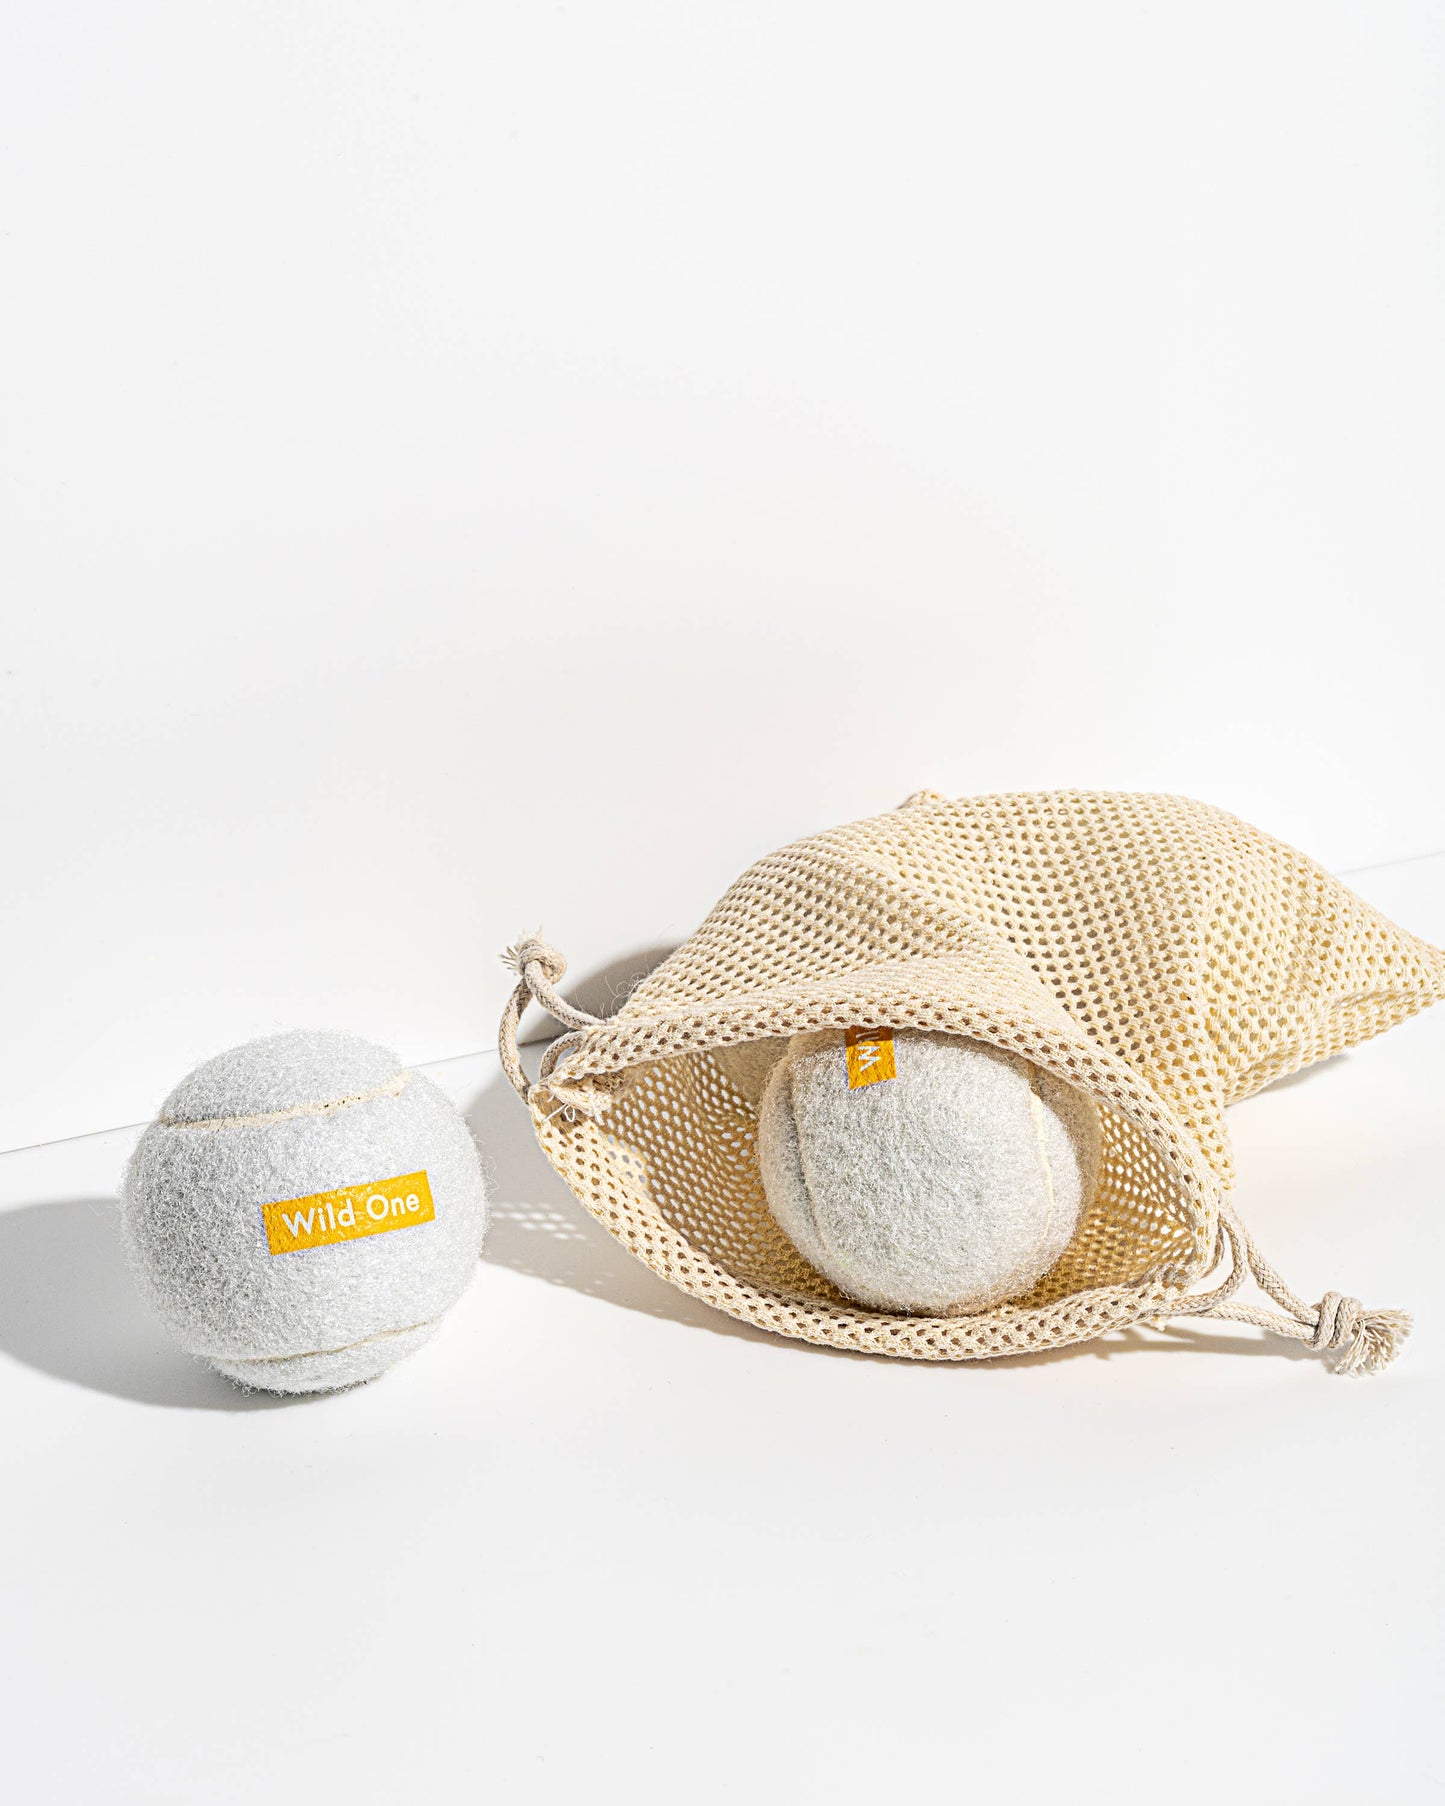 Set of 4 Wild One Tennis Balls in White